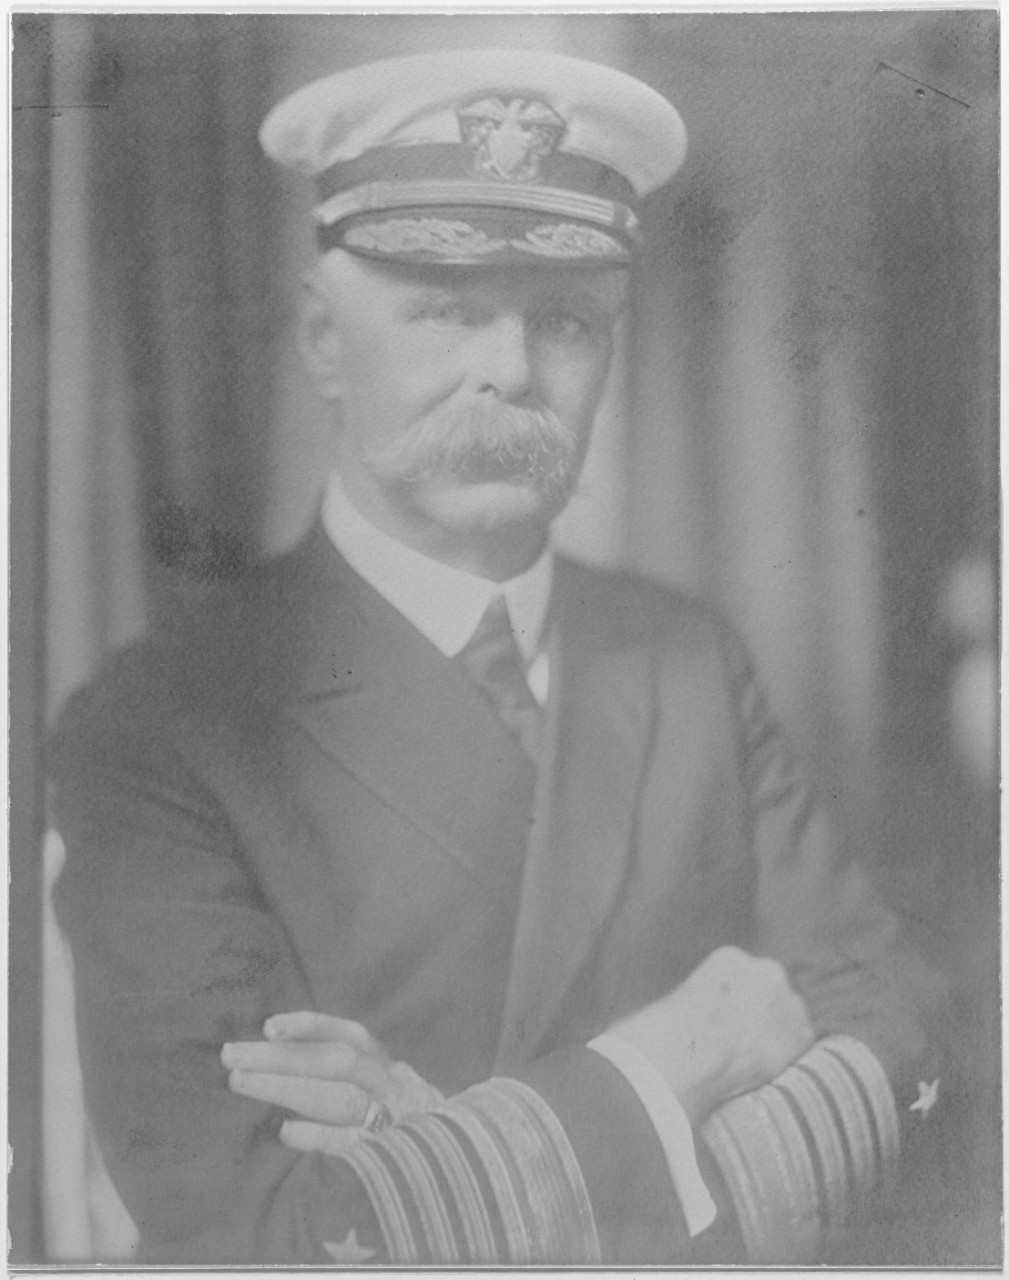 Admiral Charles E. Hughes, USN